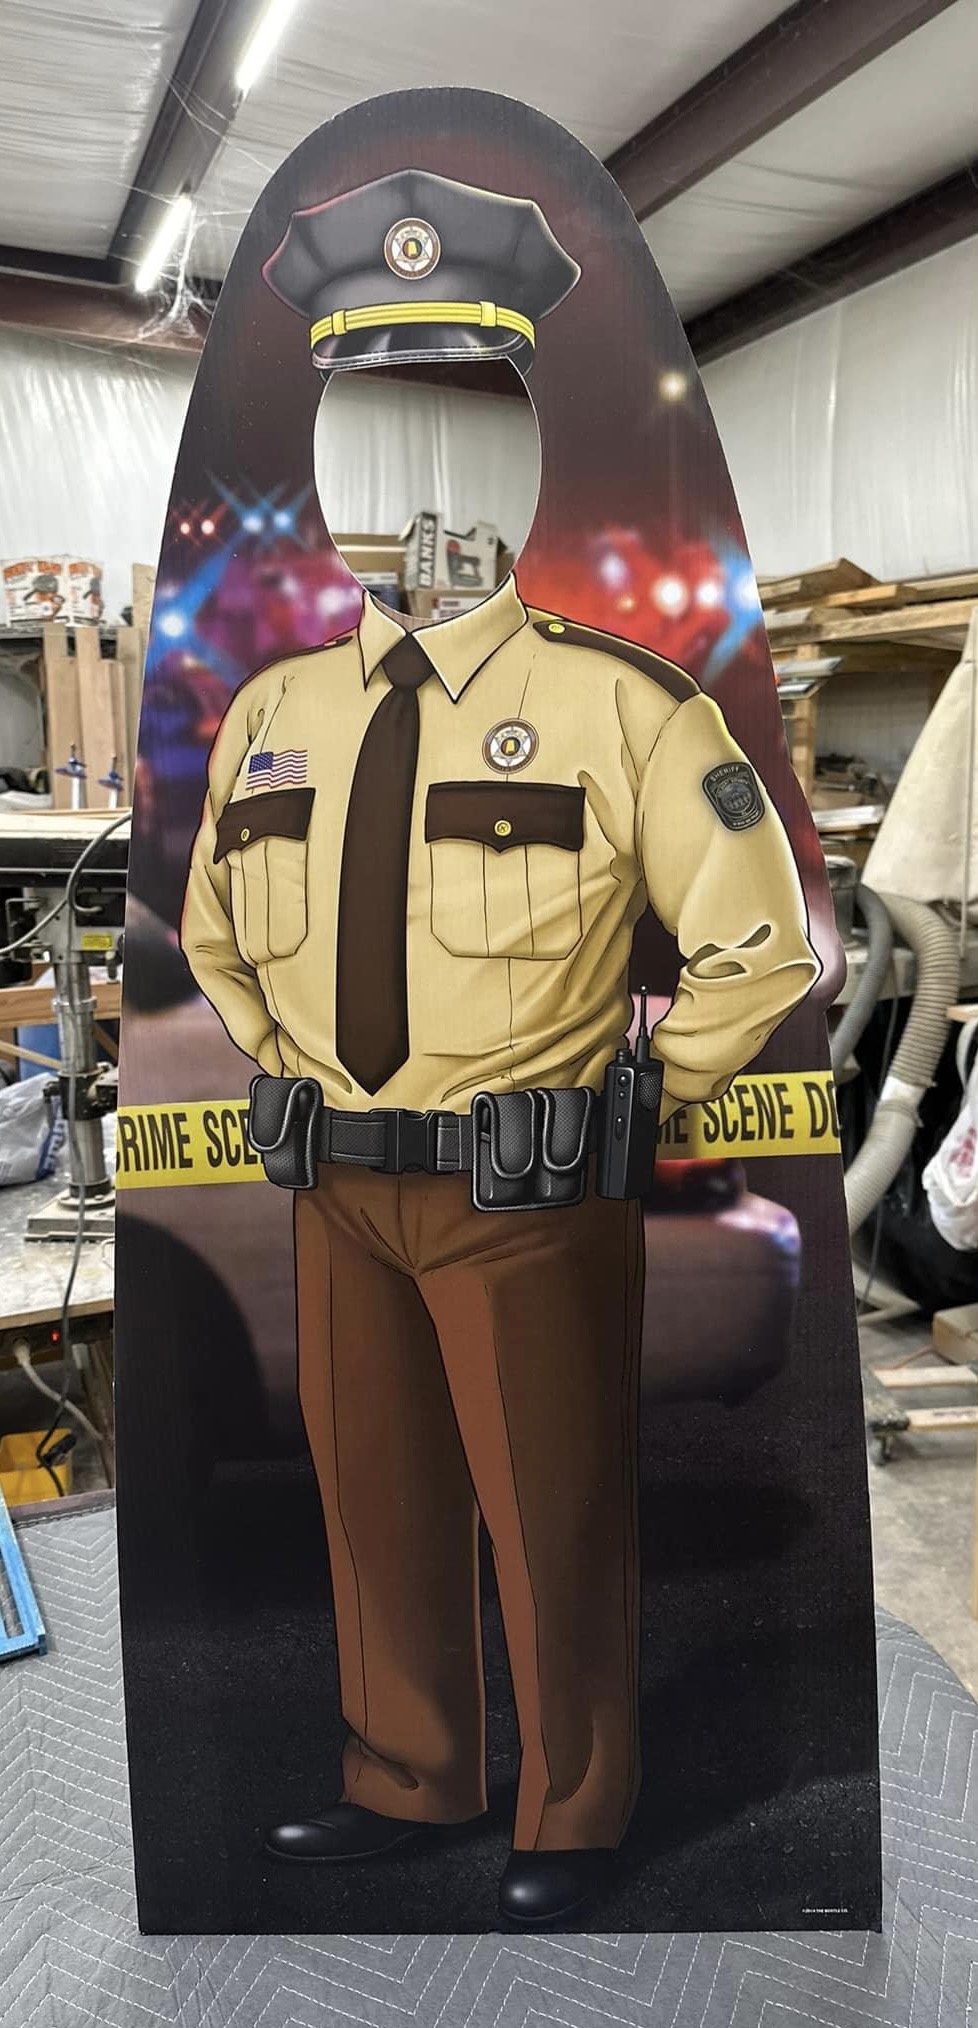 Sheriff standie